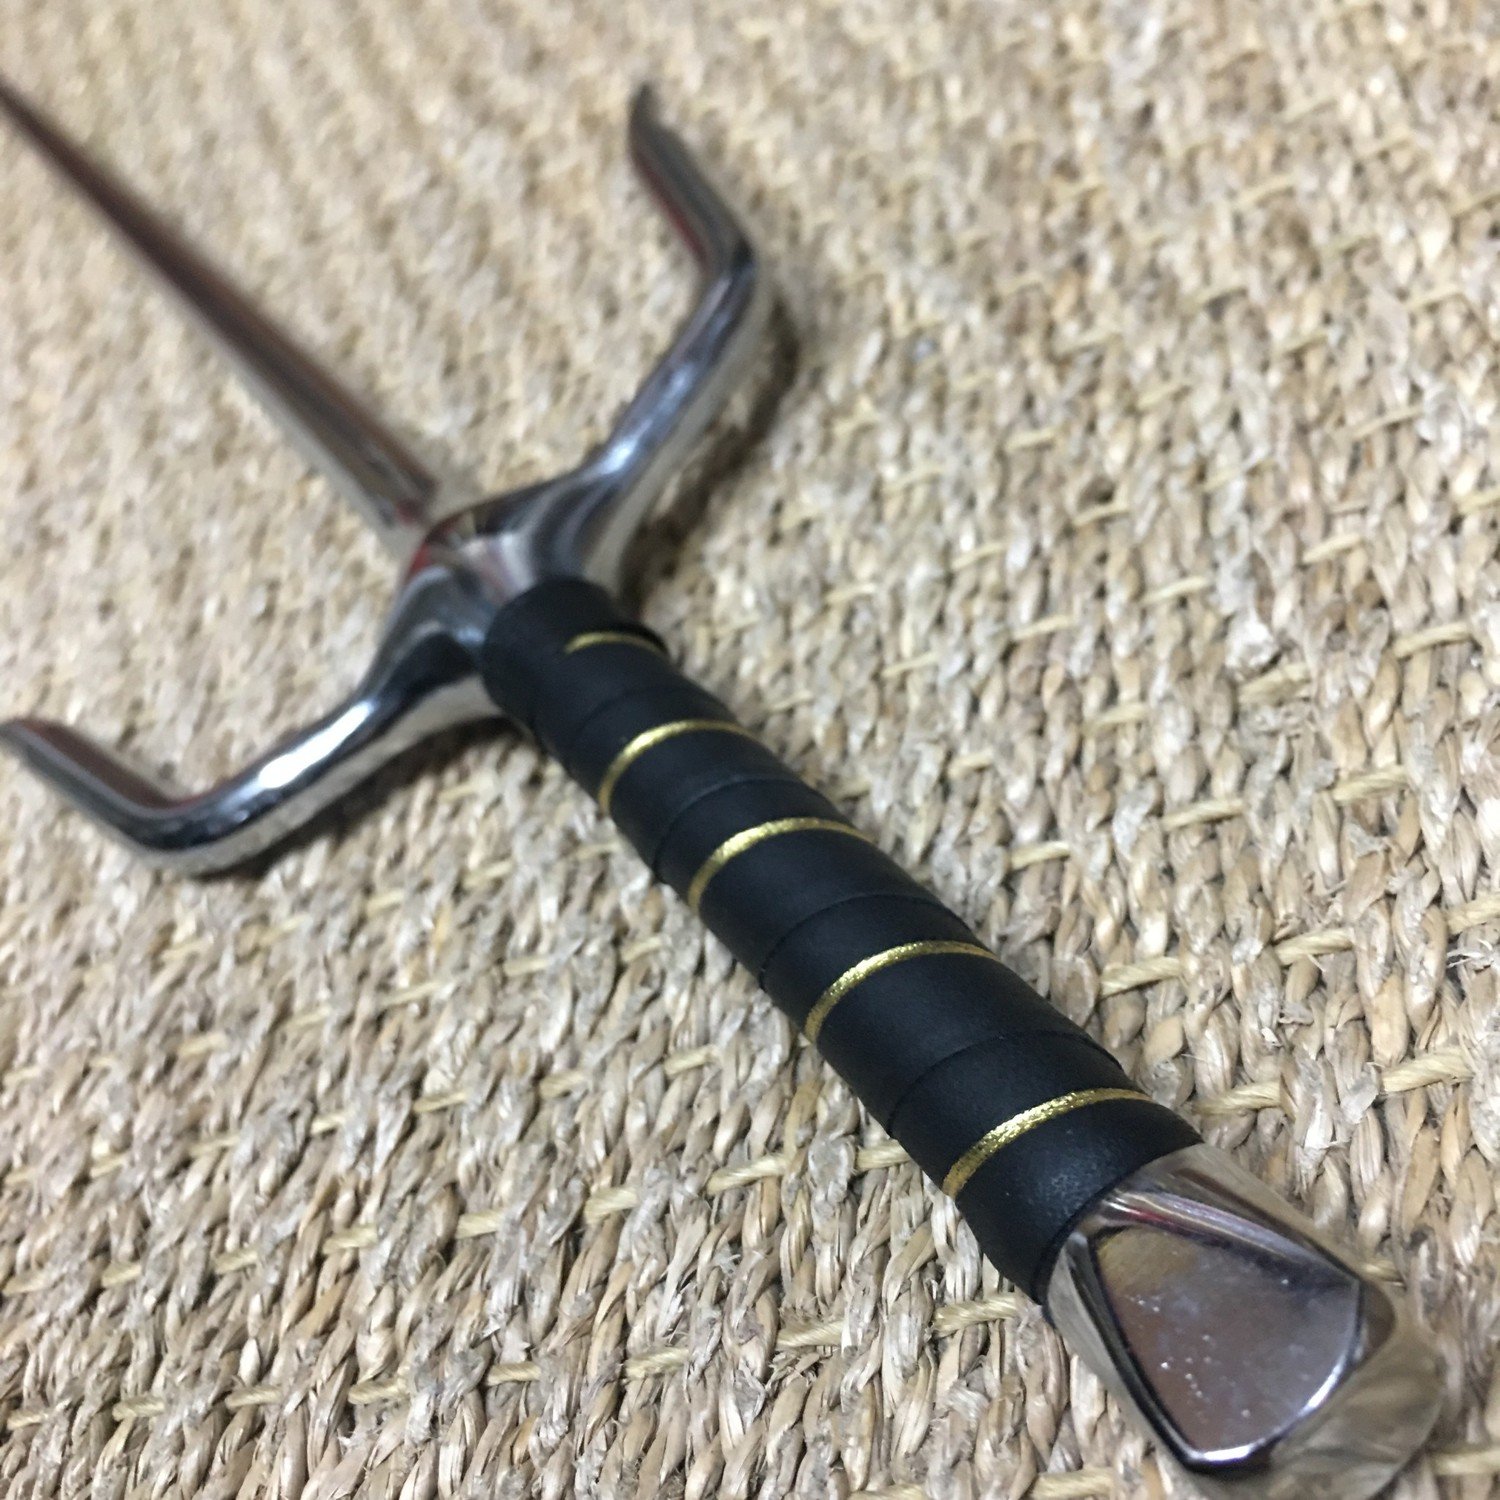 Octagonal Sai Daggers Are A Traditional Okinawan Weapon Enso Martial Arts Shop Bristol 8515